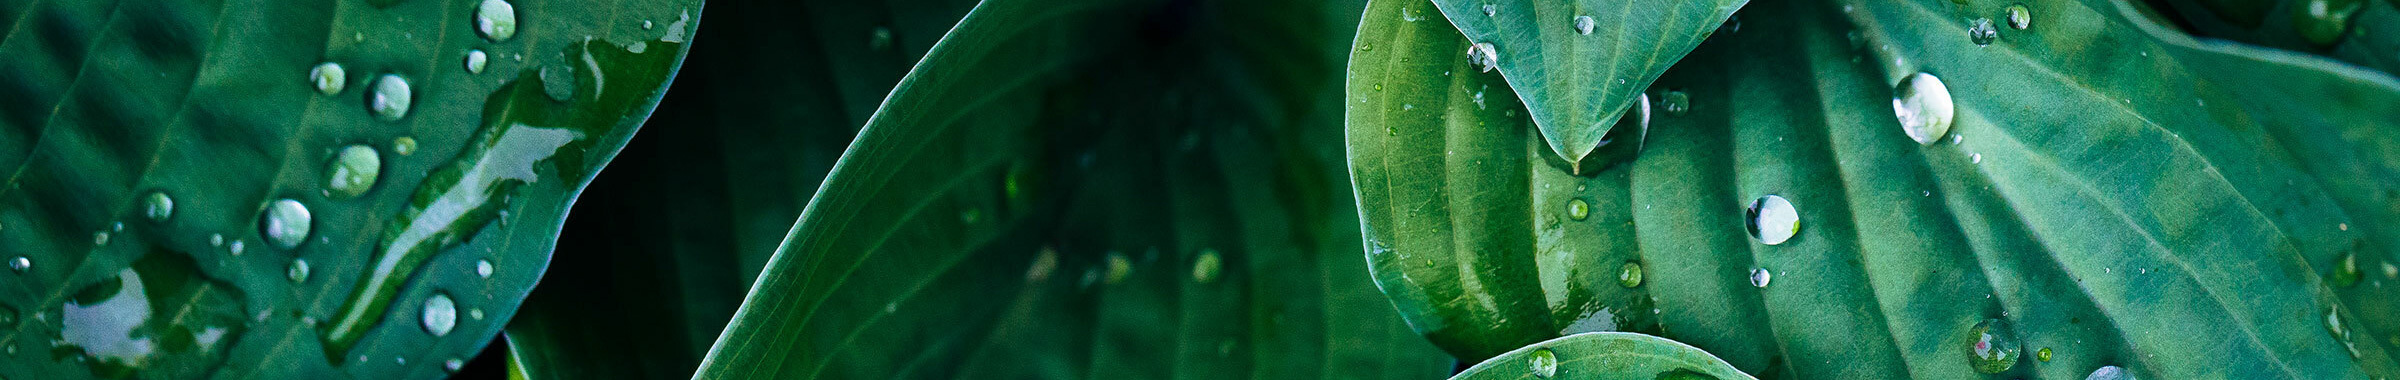 Green leaf on rainy day close up